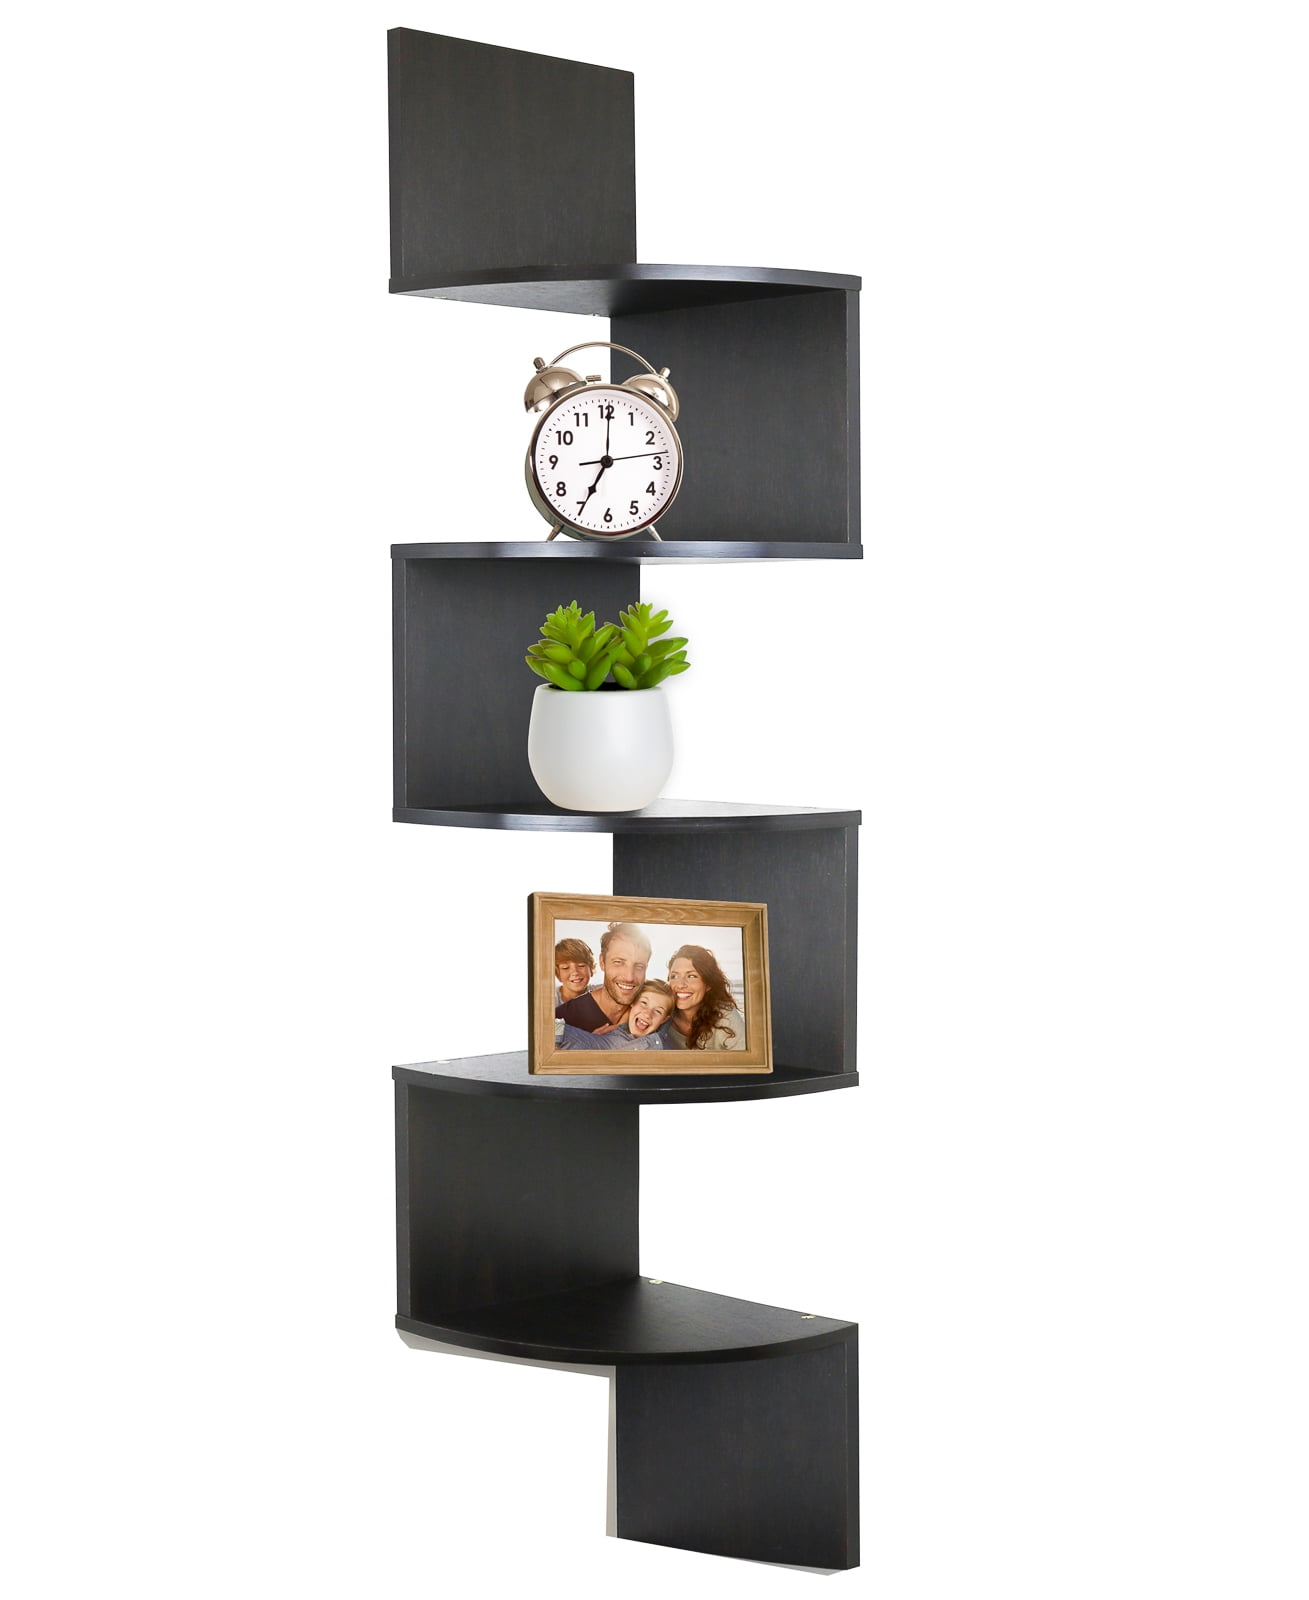 Floating Wall Shelf Display Black Wood Shelves Corner Storage Home Decor NEW 